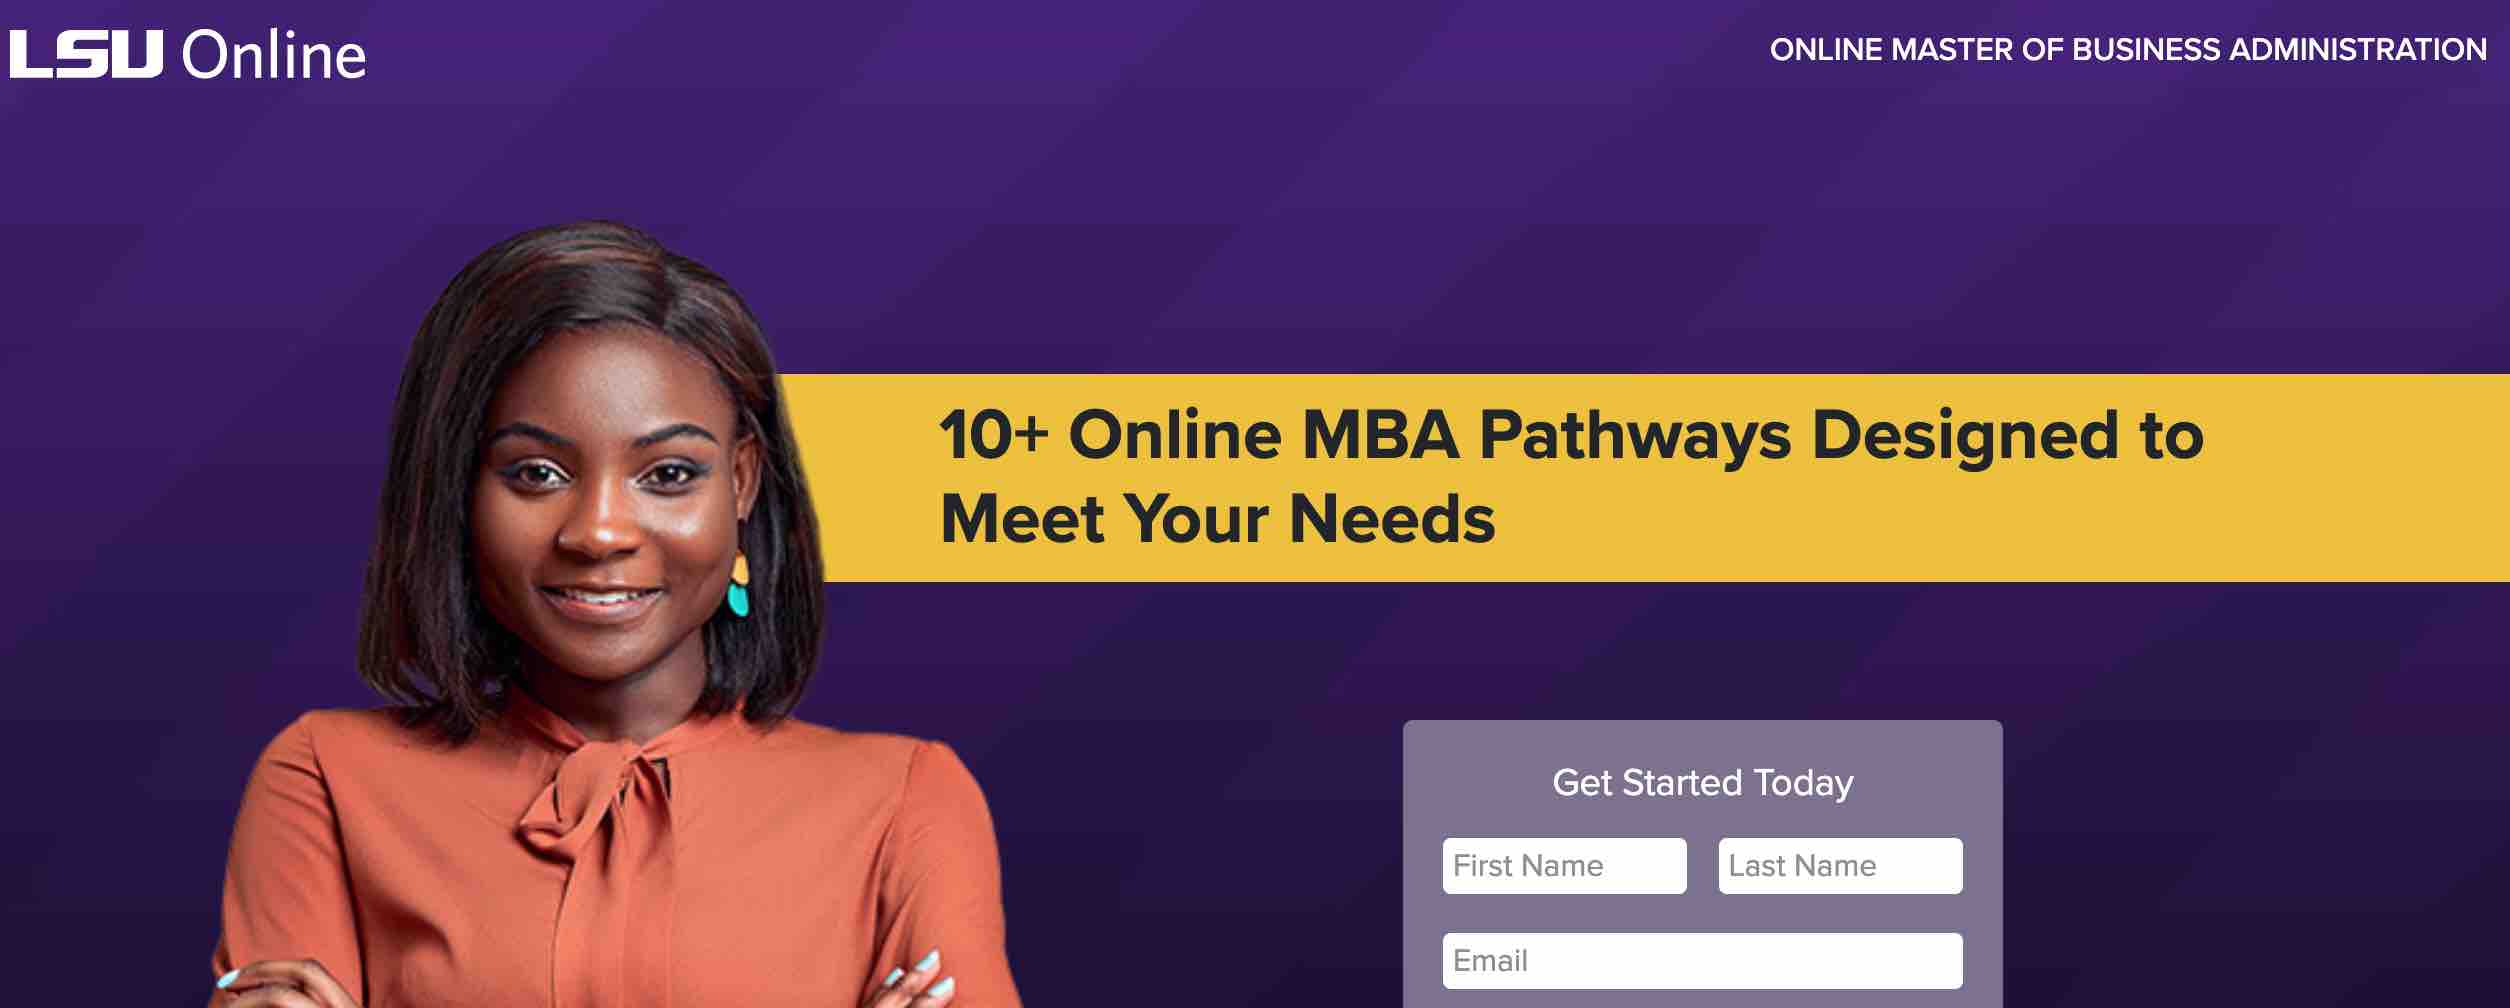 student recruitment for online MBA programs